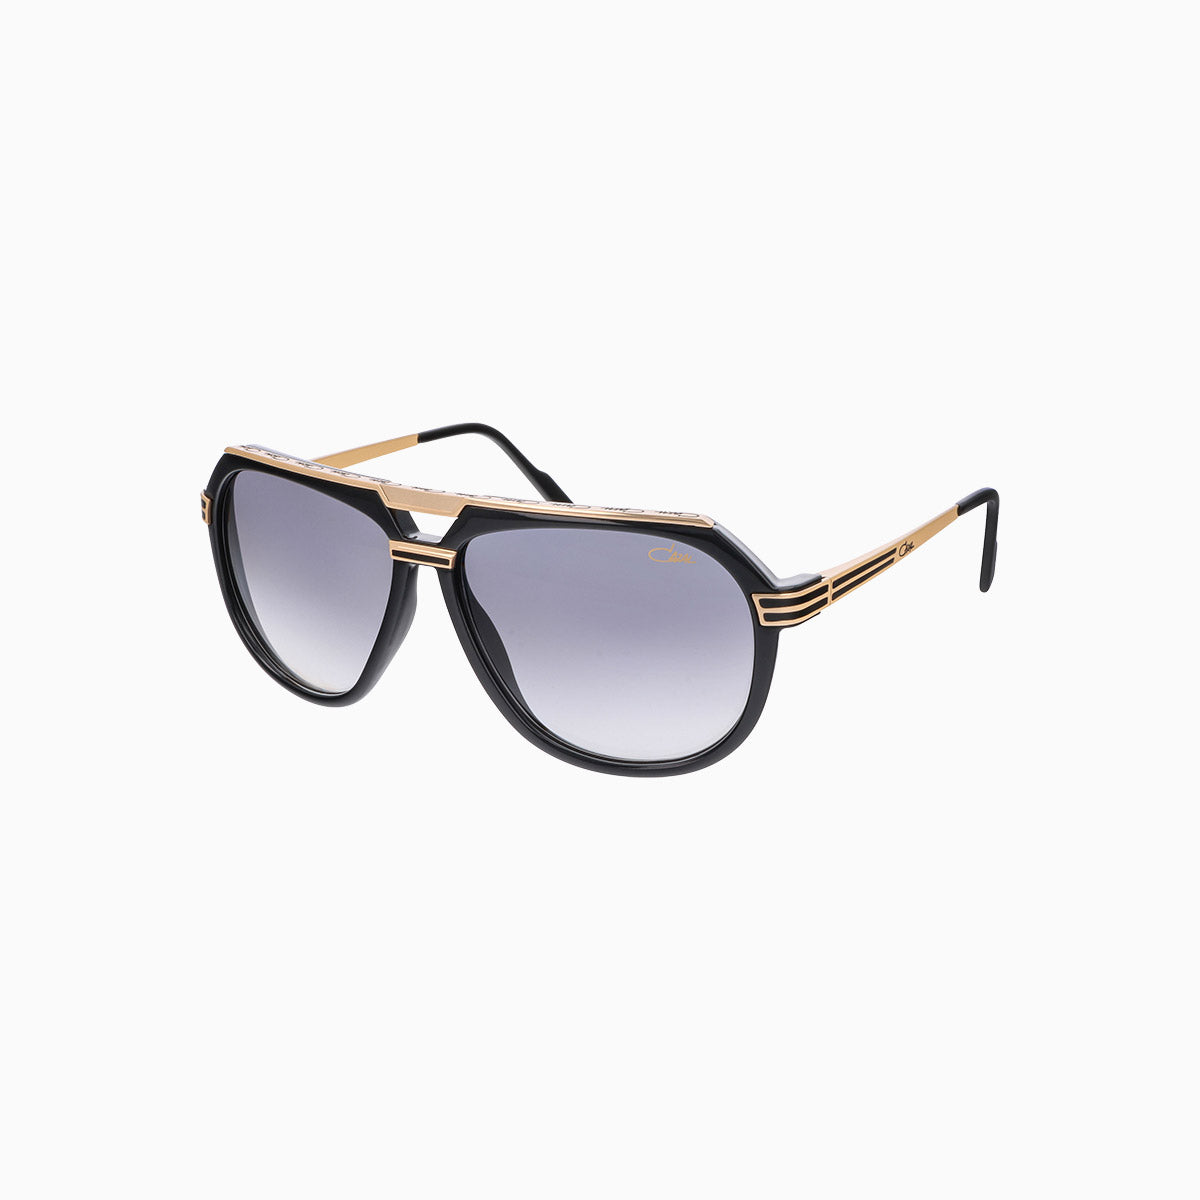 mens-cazal-674-black-gold-sunglasses-674-001